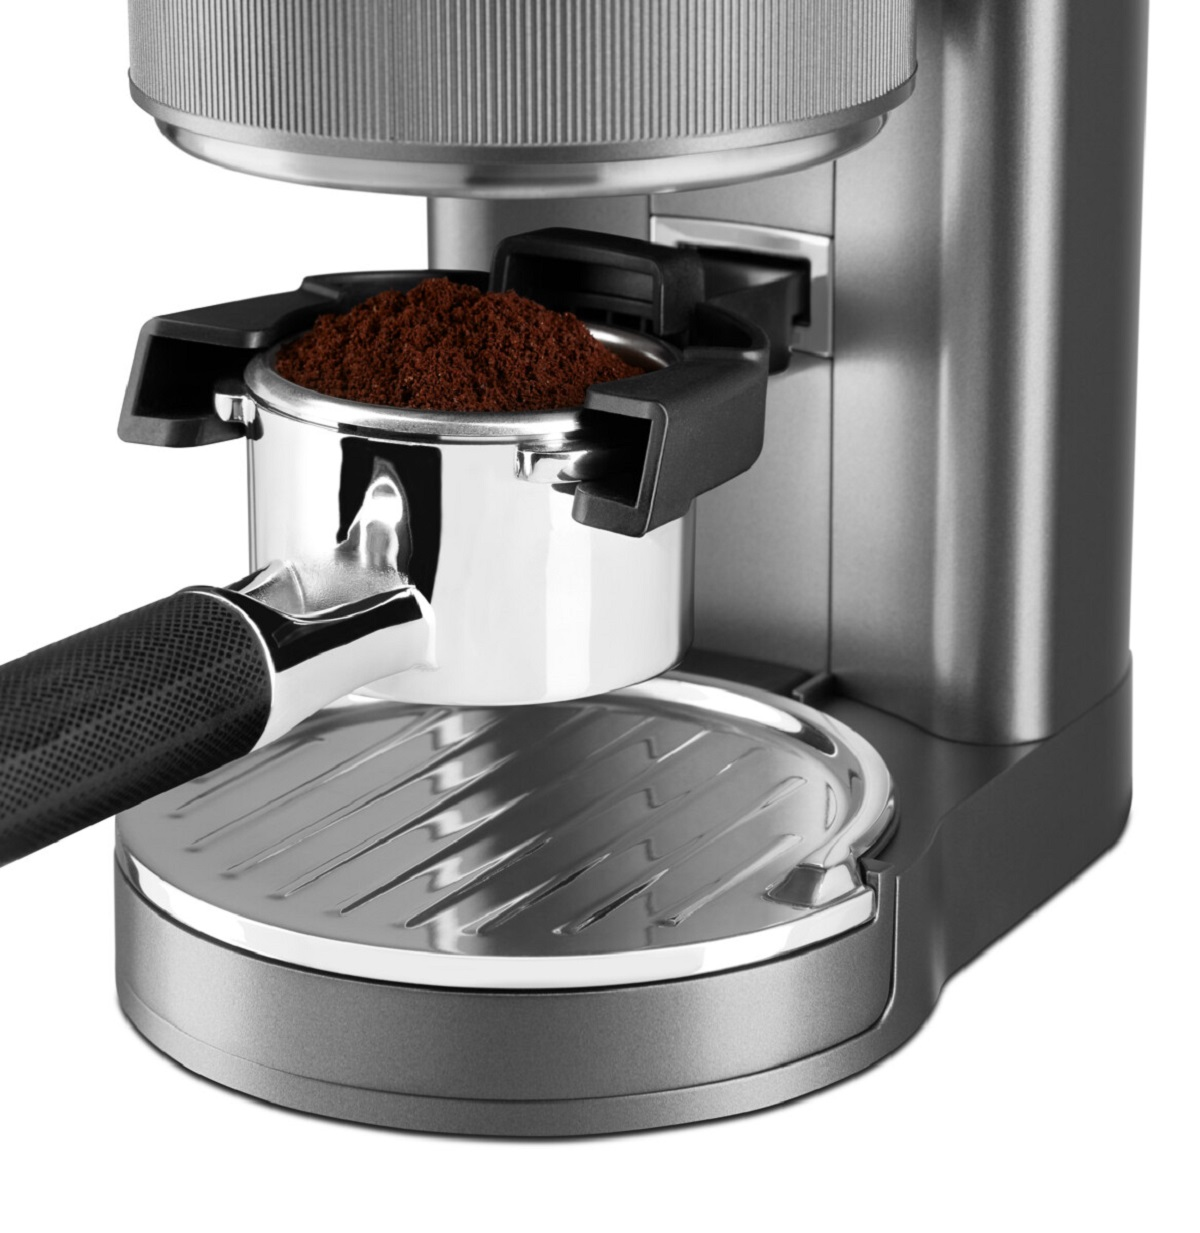 KITCHENAID 5KCG8433EAC ARTISAN CREME (150 Edelstahl-Mahlkegel) Creme Kaffeemühle Watt